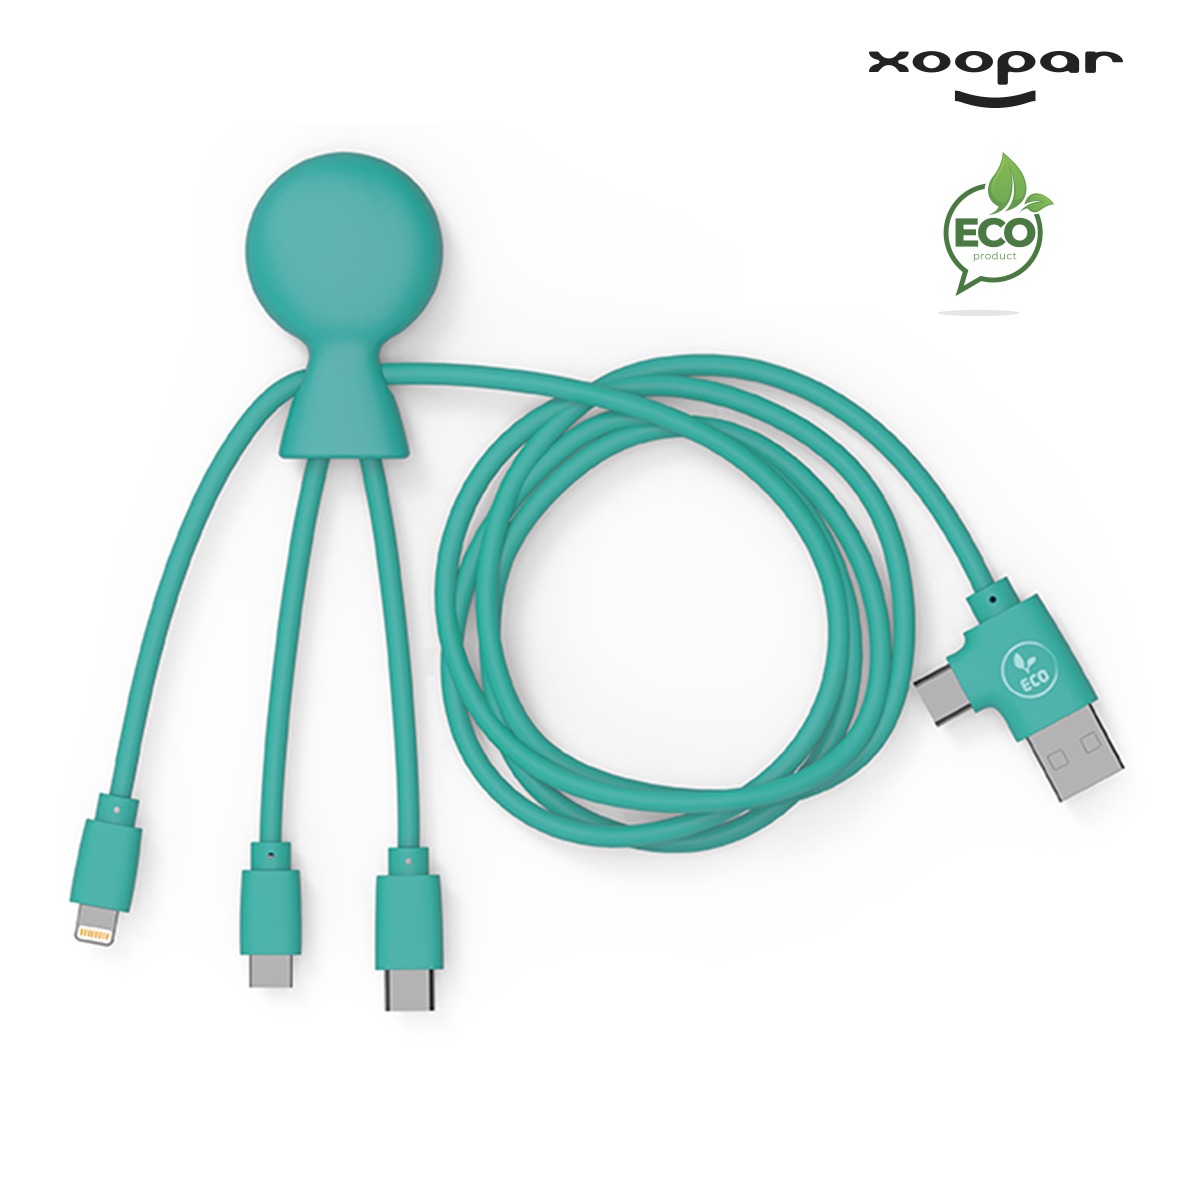 Cable multi connectiques – Mr bio Long recycle Xoopar personnalise-3